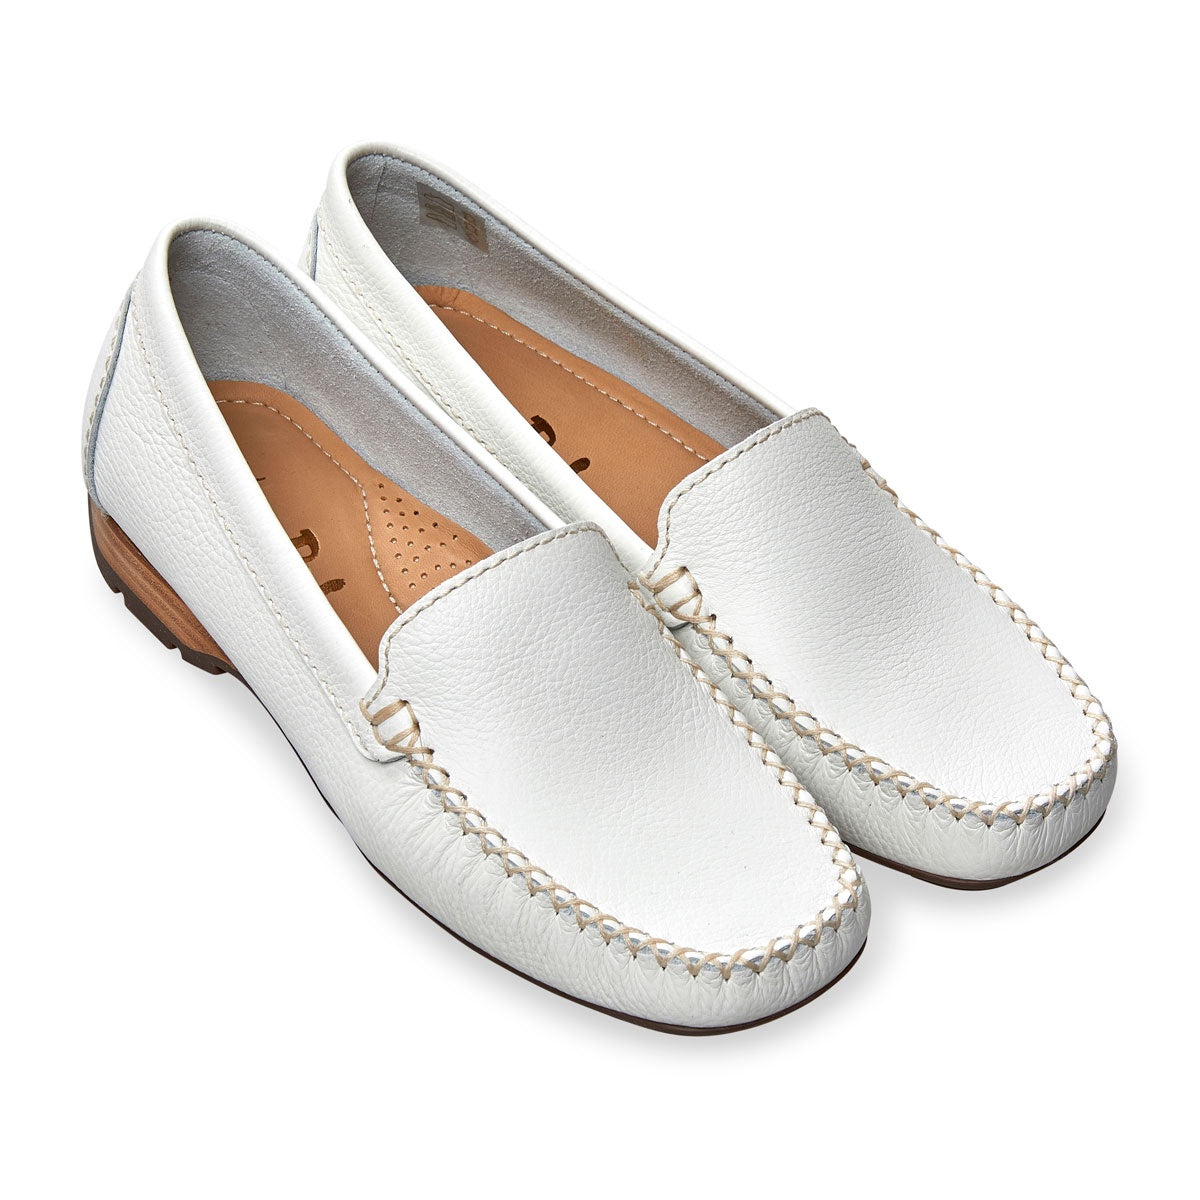 Van Dal Sanson Ladies White Leather Loafers